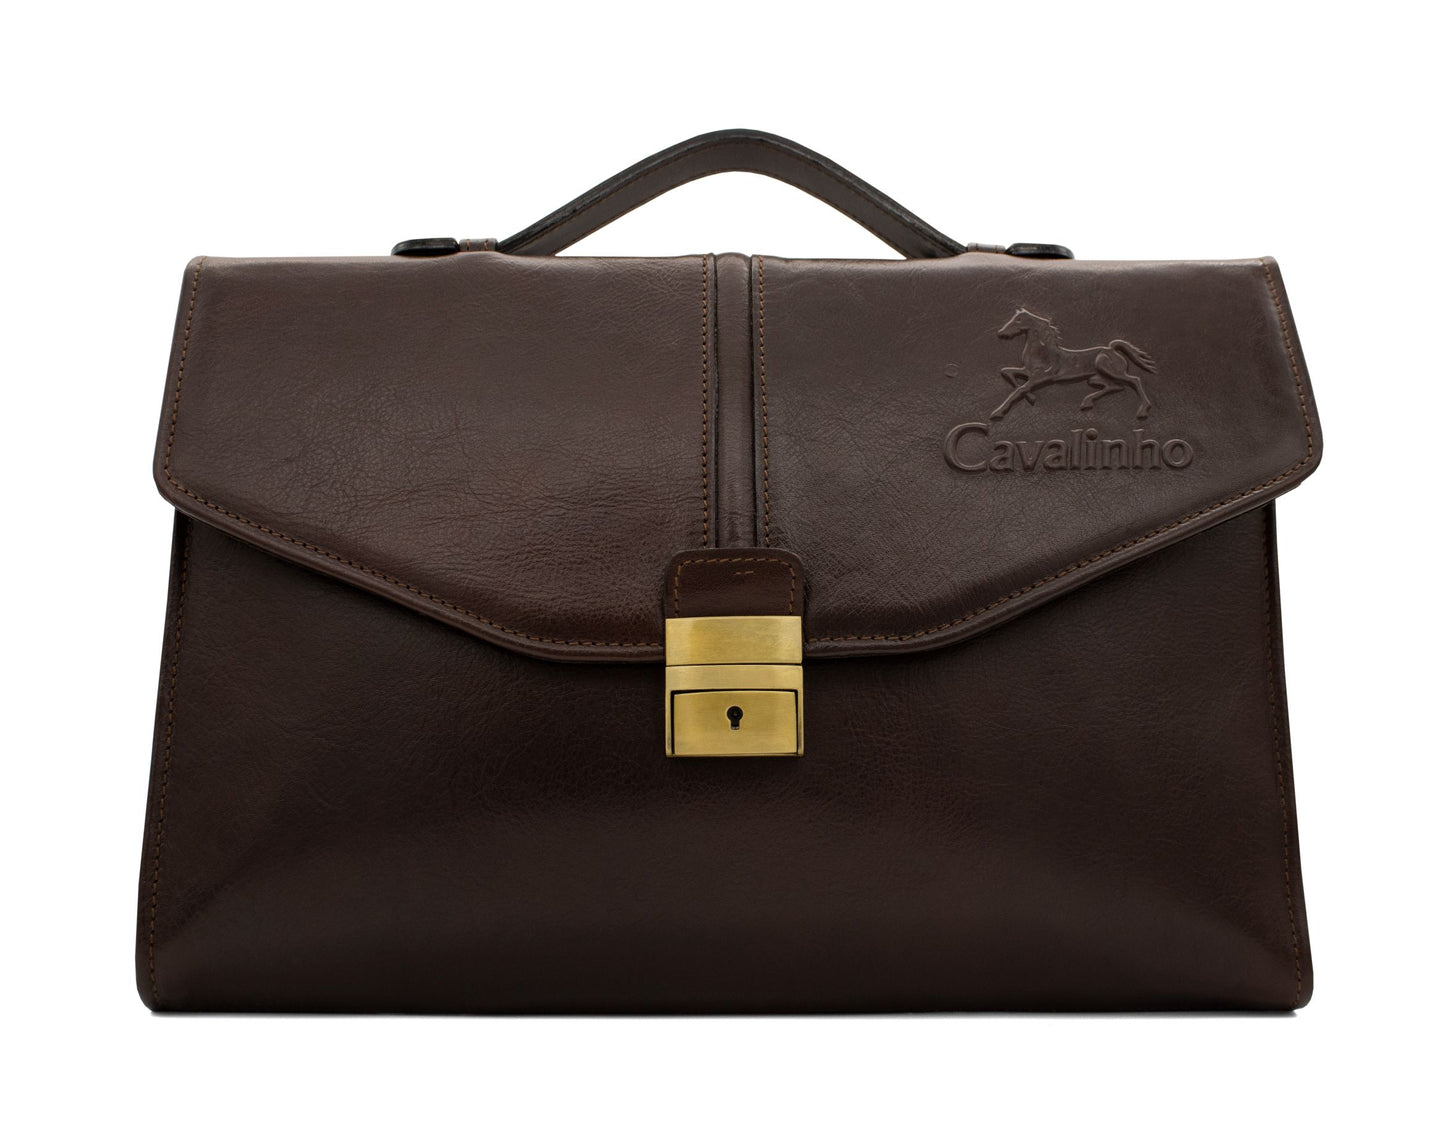 Cavalinho Leather Briefcase with Lock & Key - Brown - 18320172.02_P01